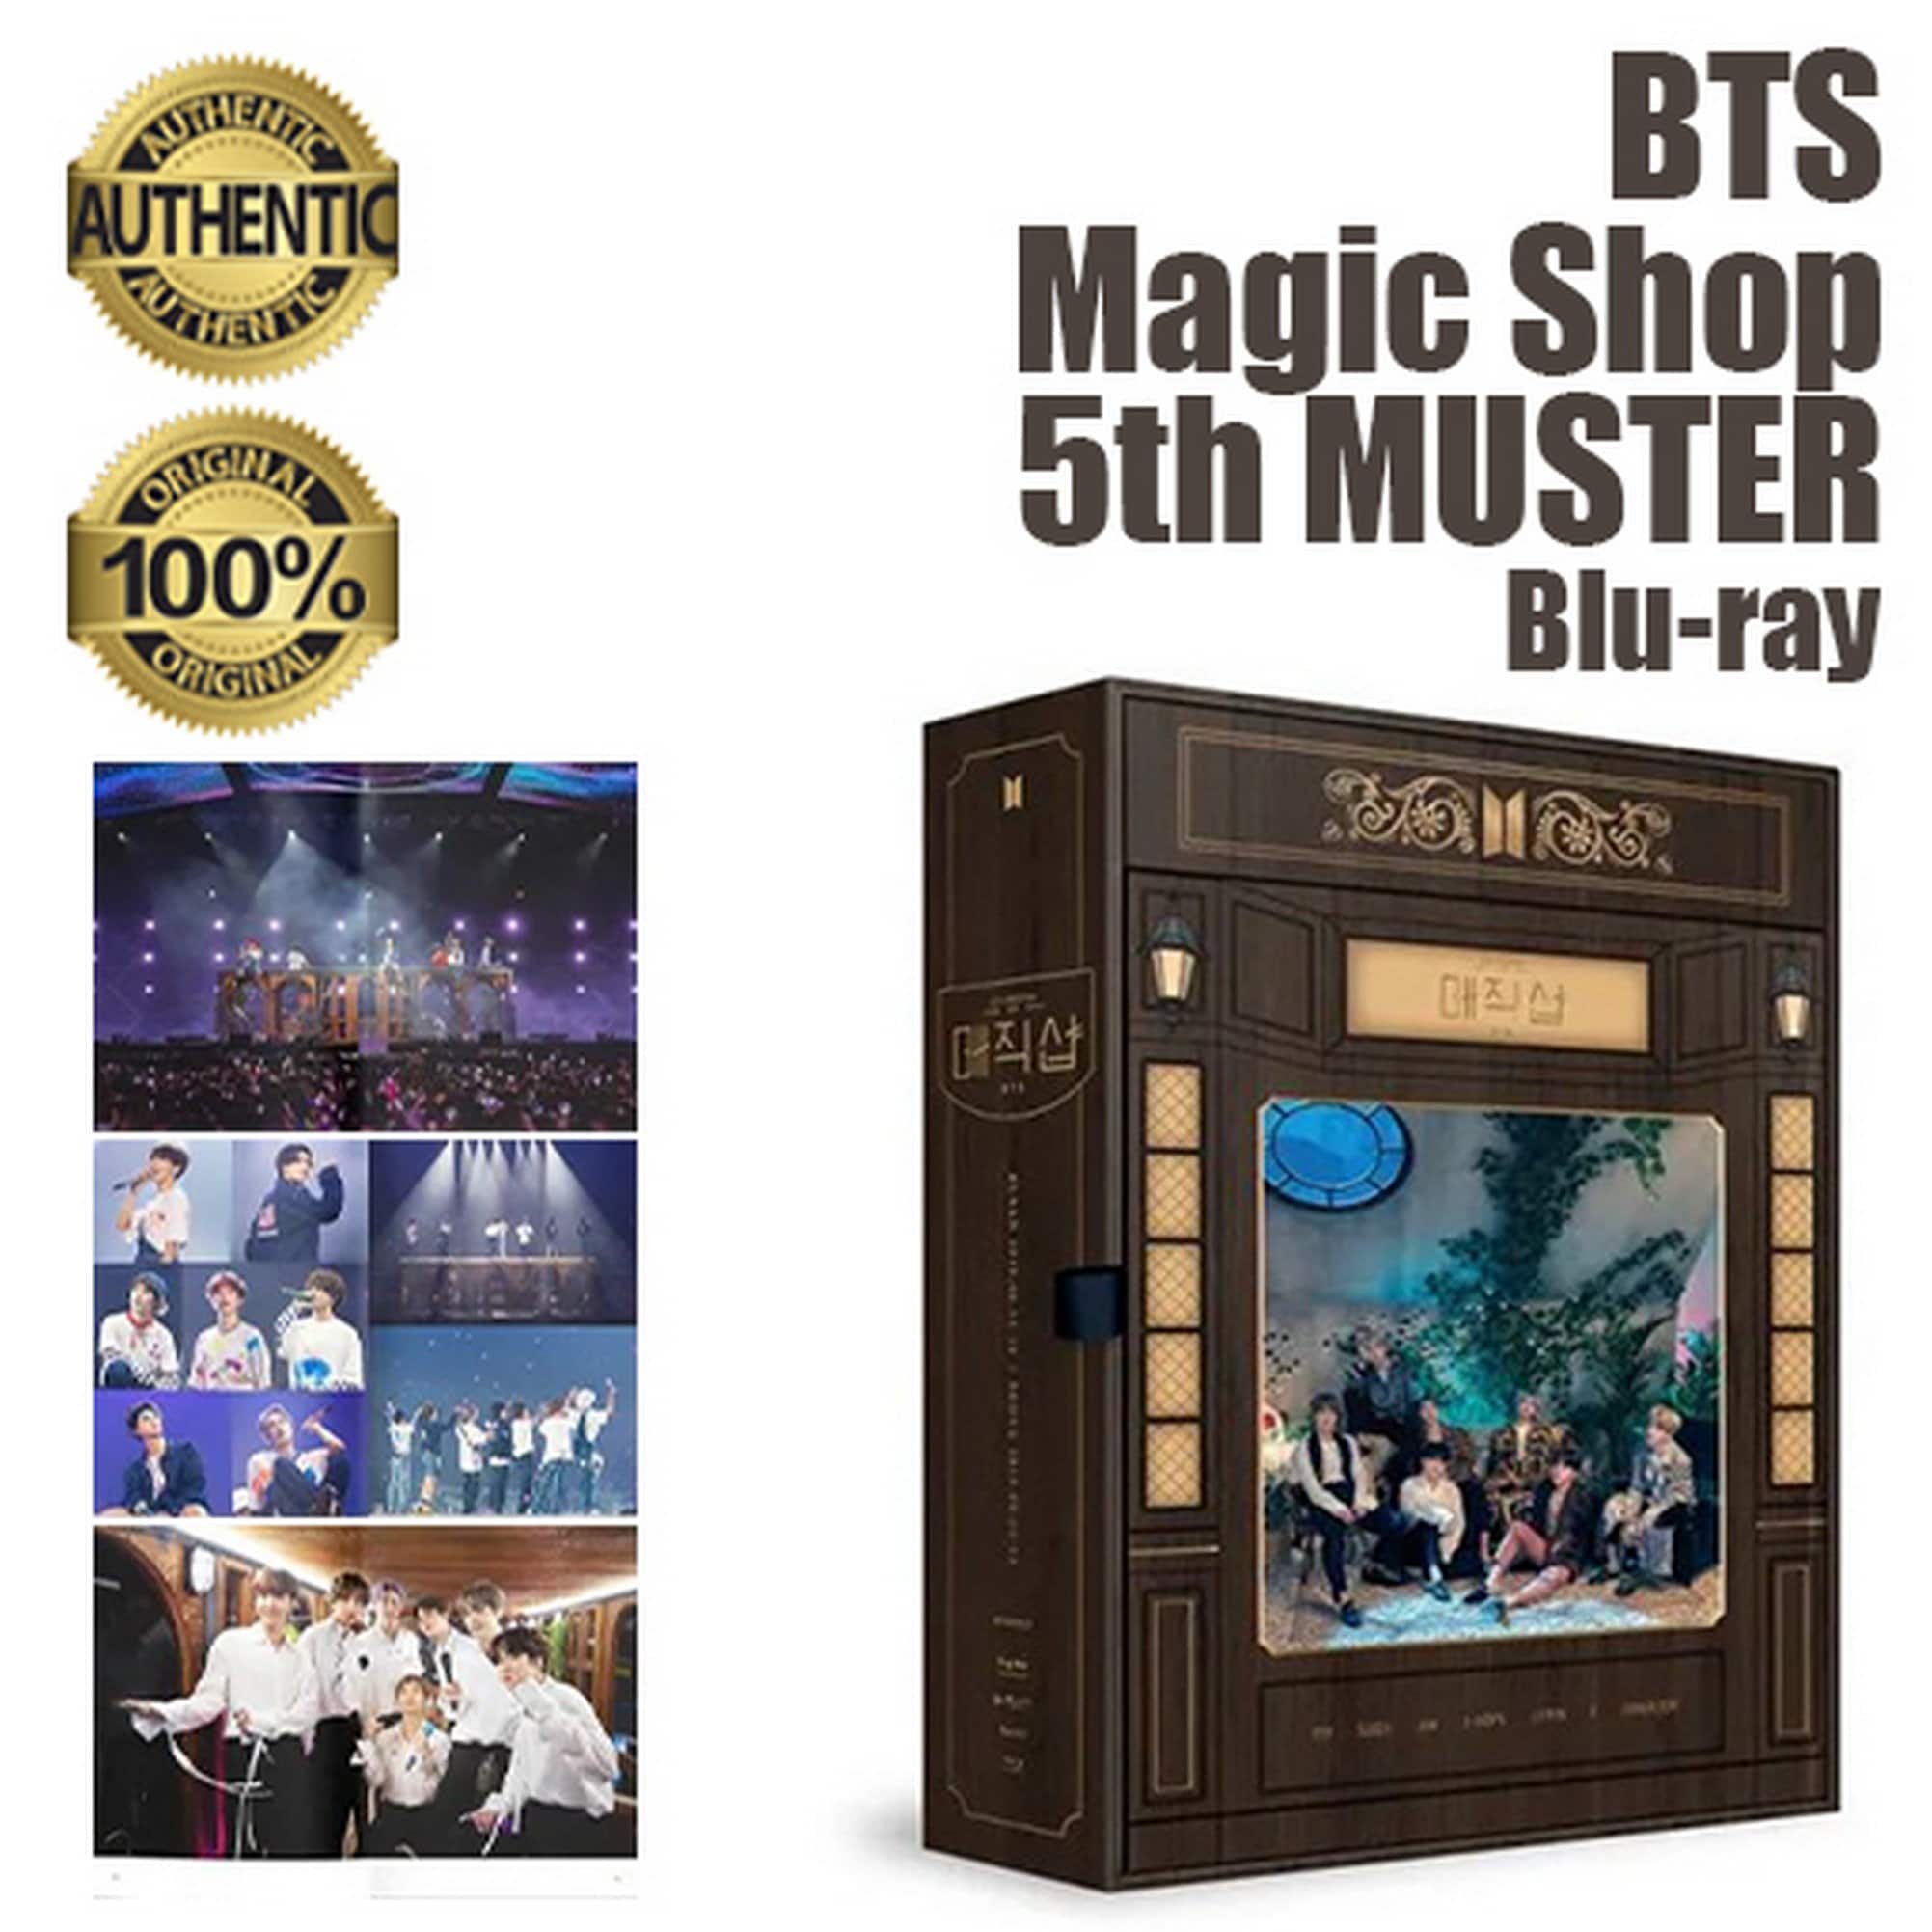 BTS 5th Muster Magic Shop Blu Ray Full Set